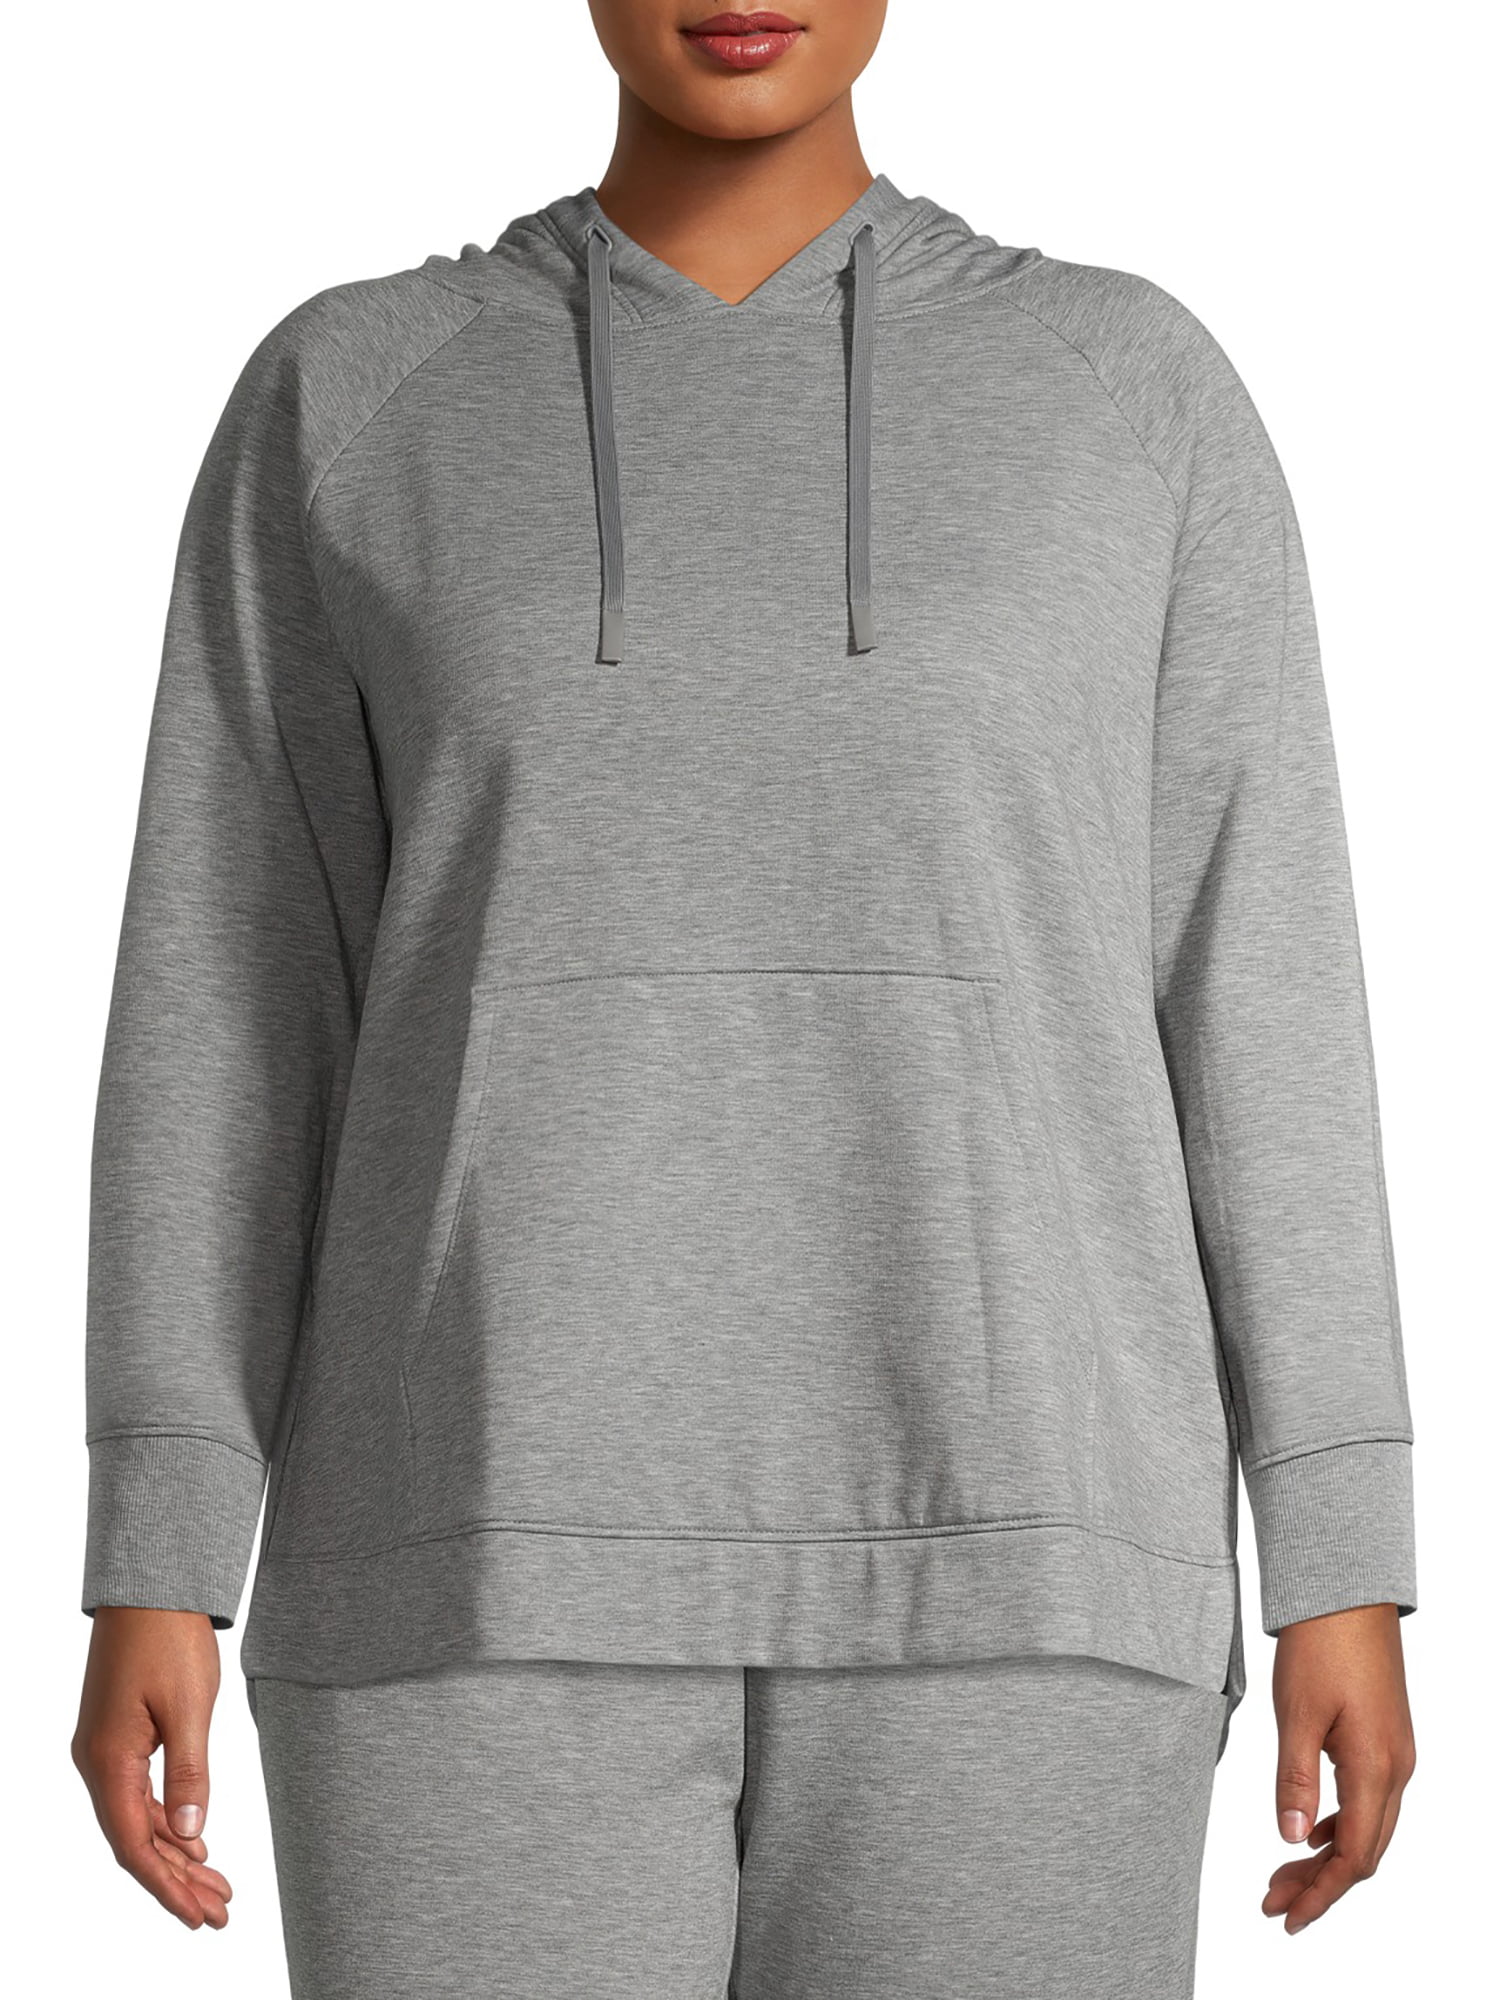 Athletic Works Women's Plus Size Soft Fleece Pullover Sweatshirt ...